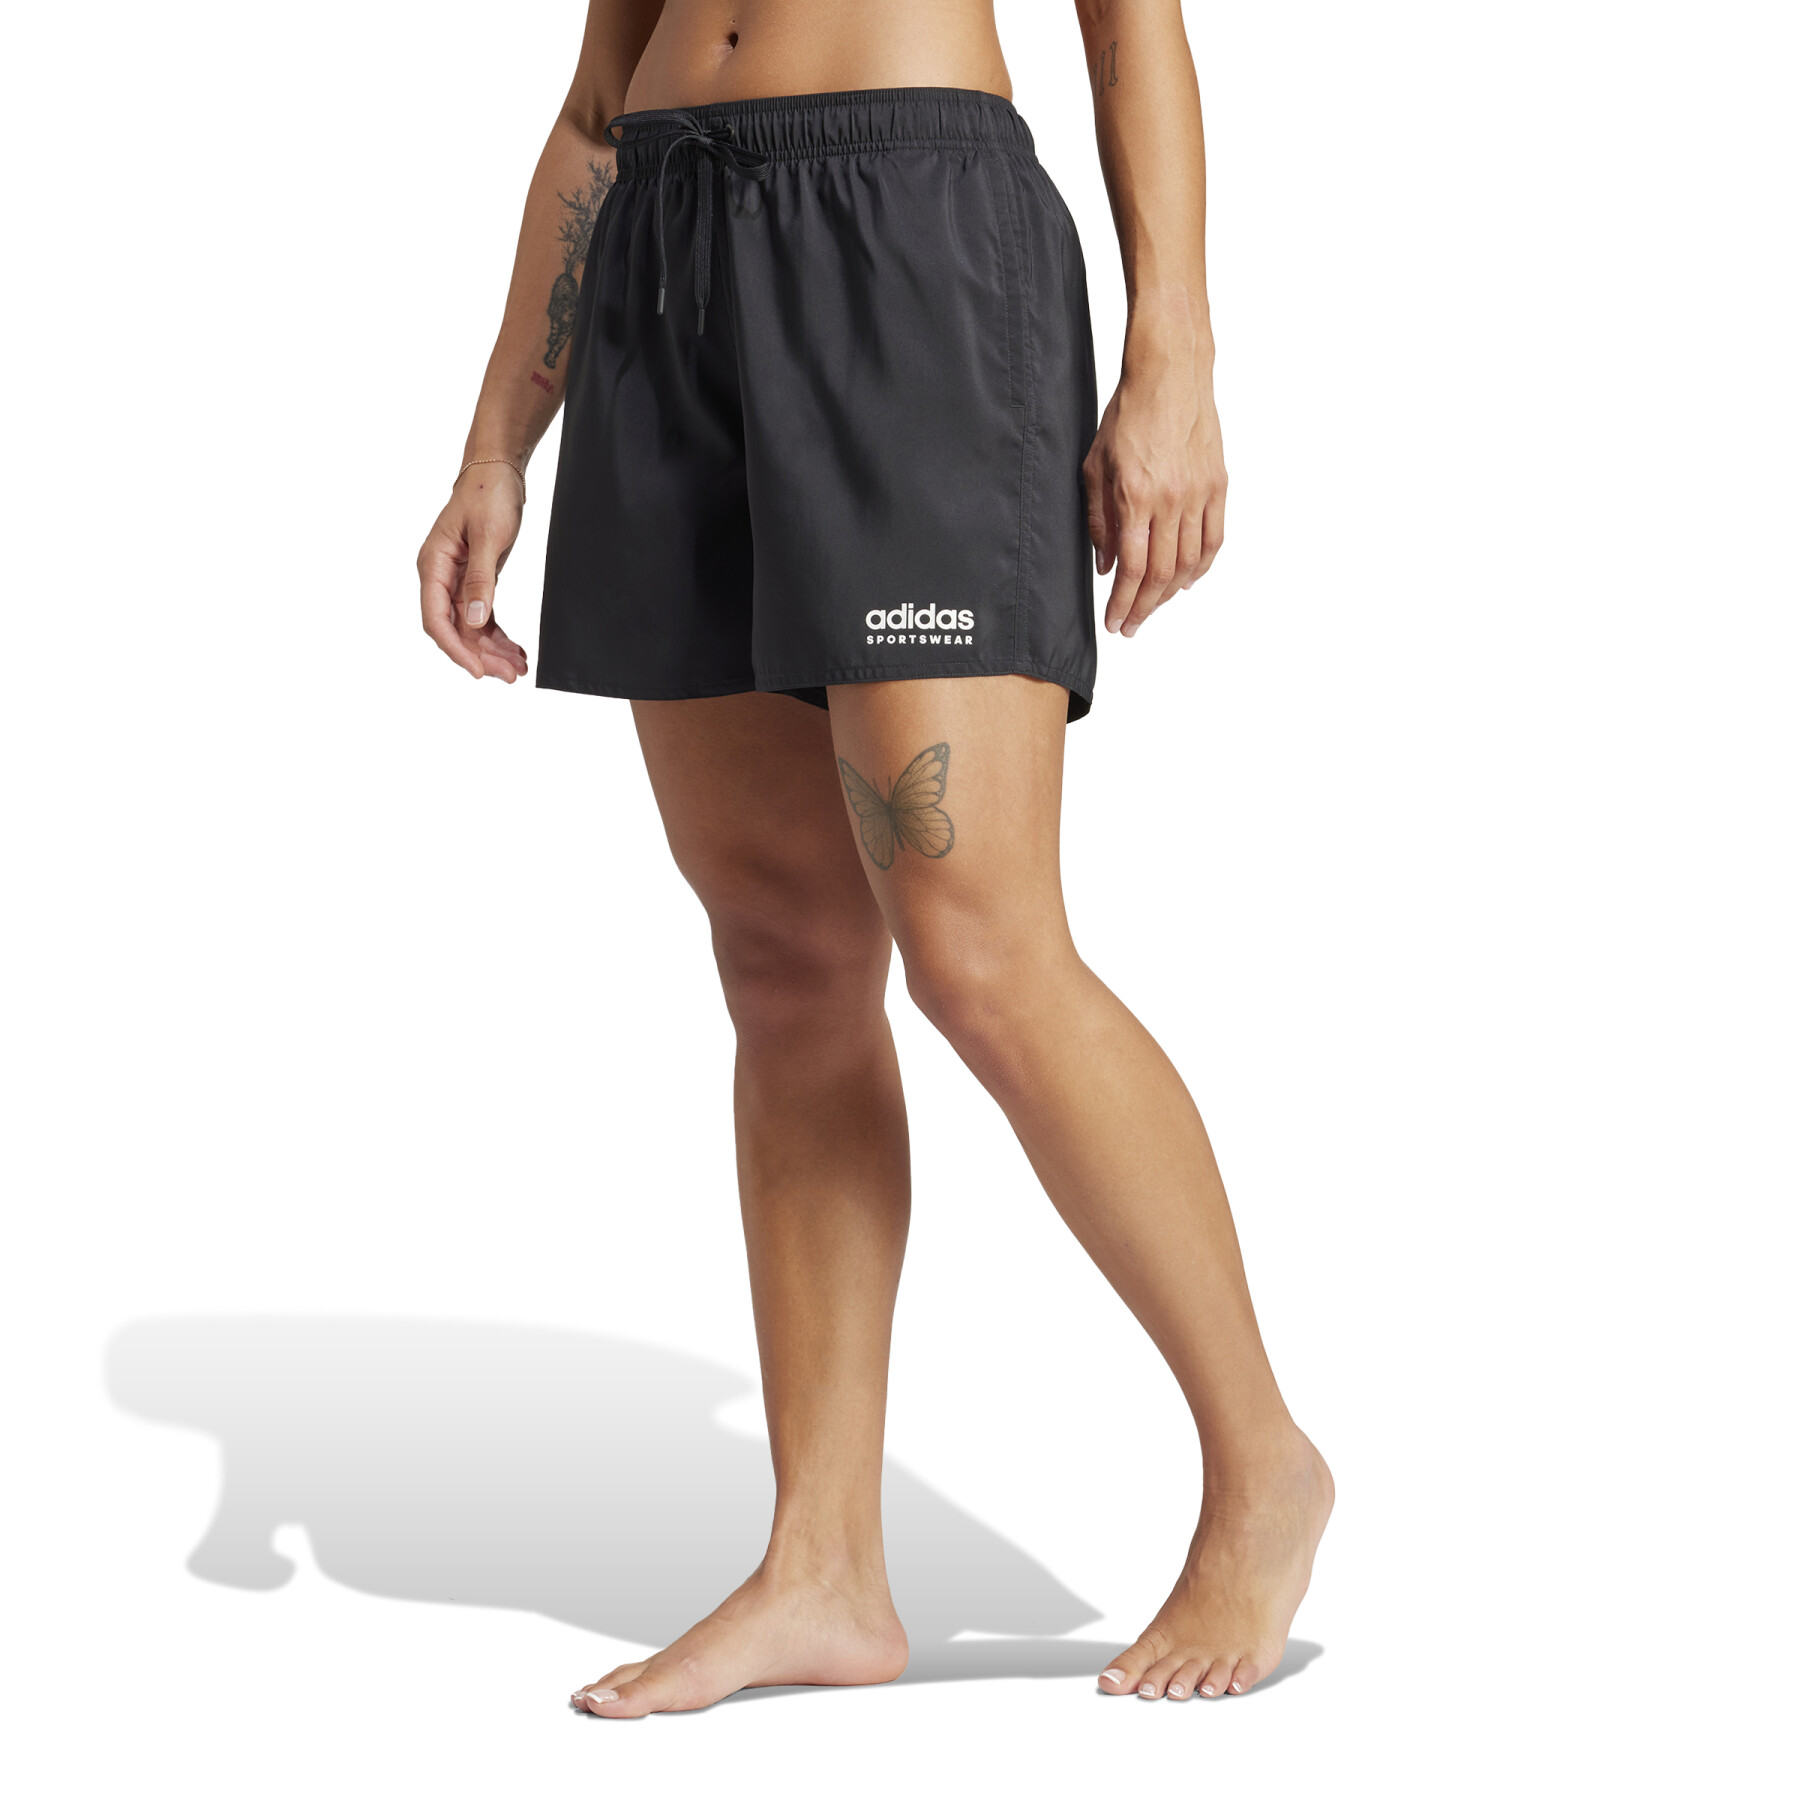 Women's swim shorts adidas Branded